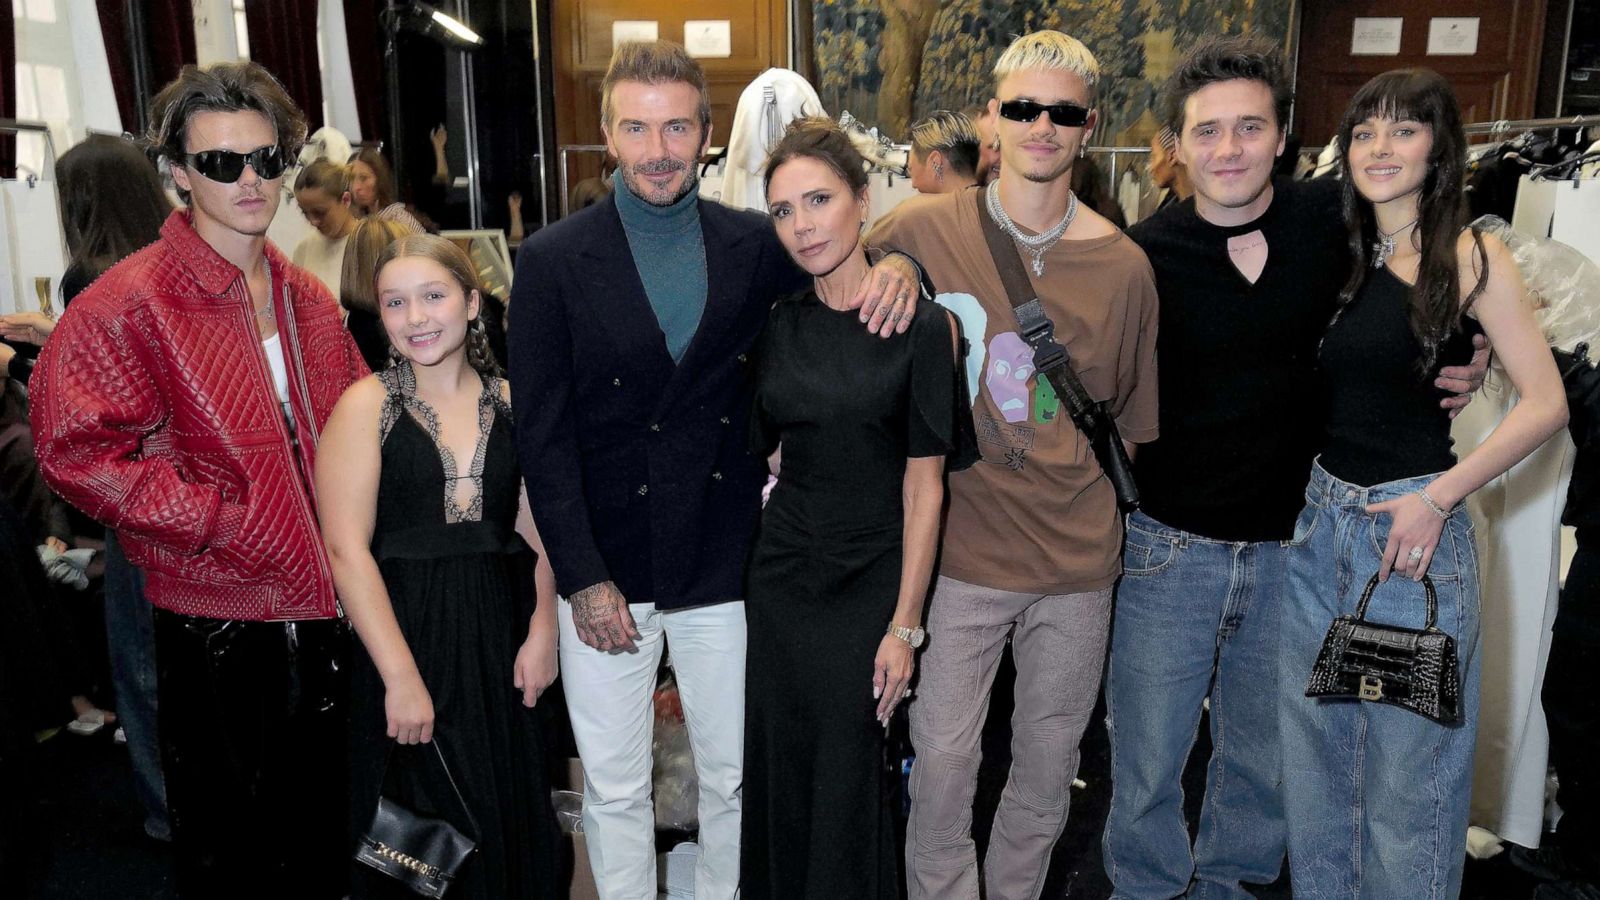 Victoria Beckham is a fashion queen while in Paris with David Beckham